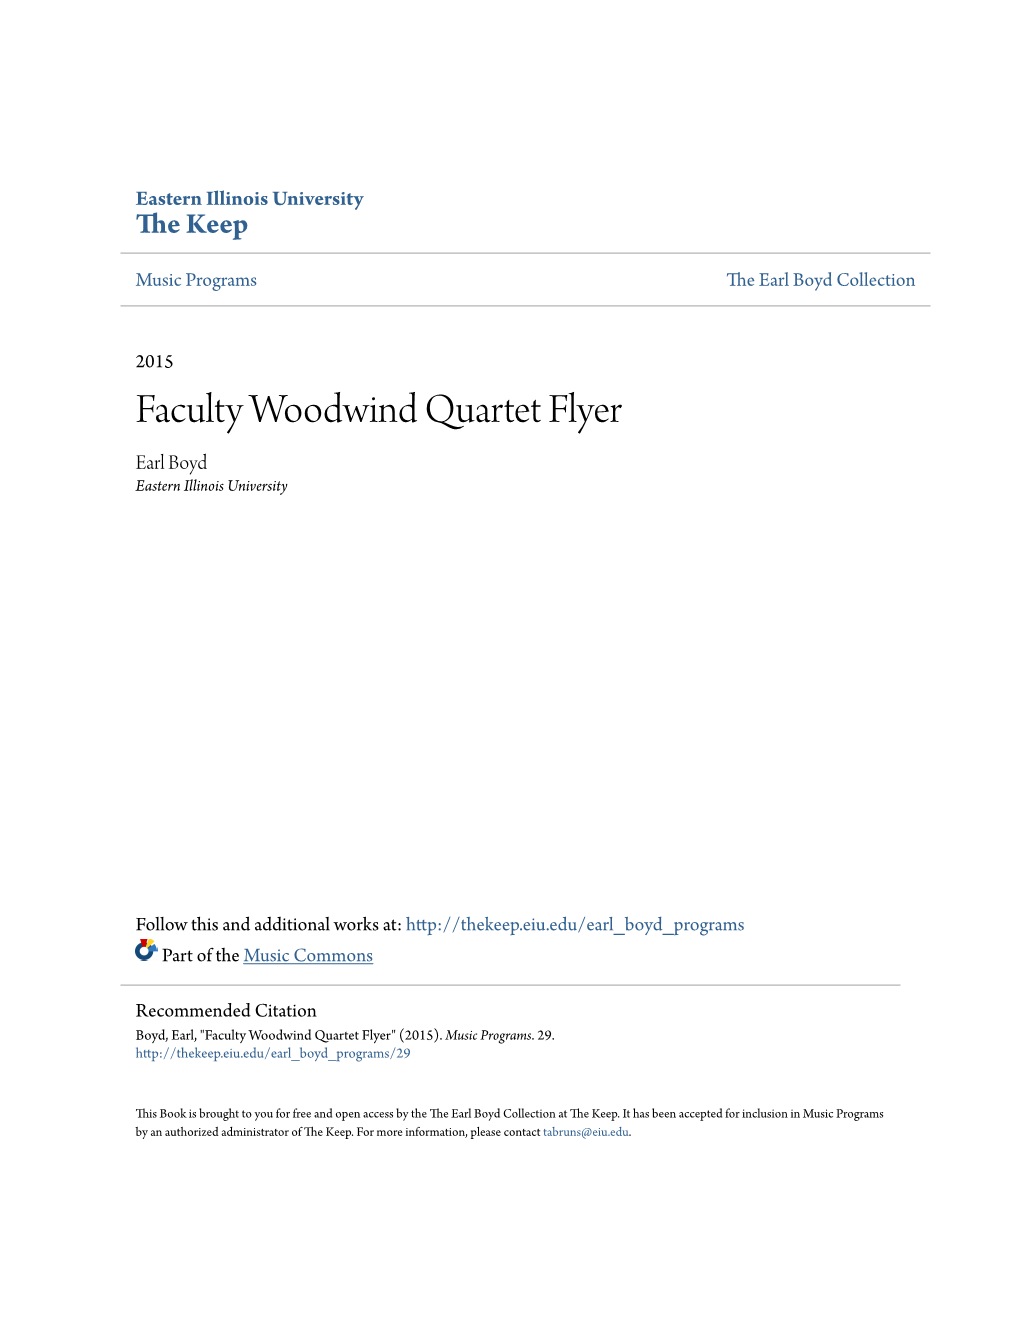 Faculty Woodwind Quartet Flyer Earl Boyd Eastern Illinois University